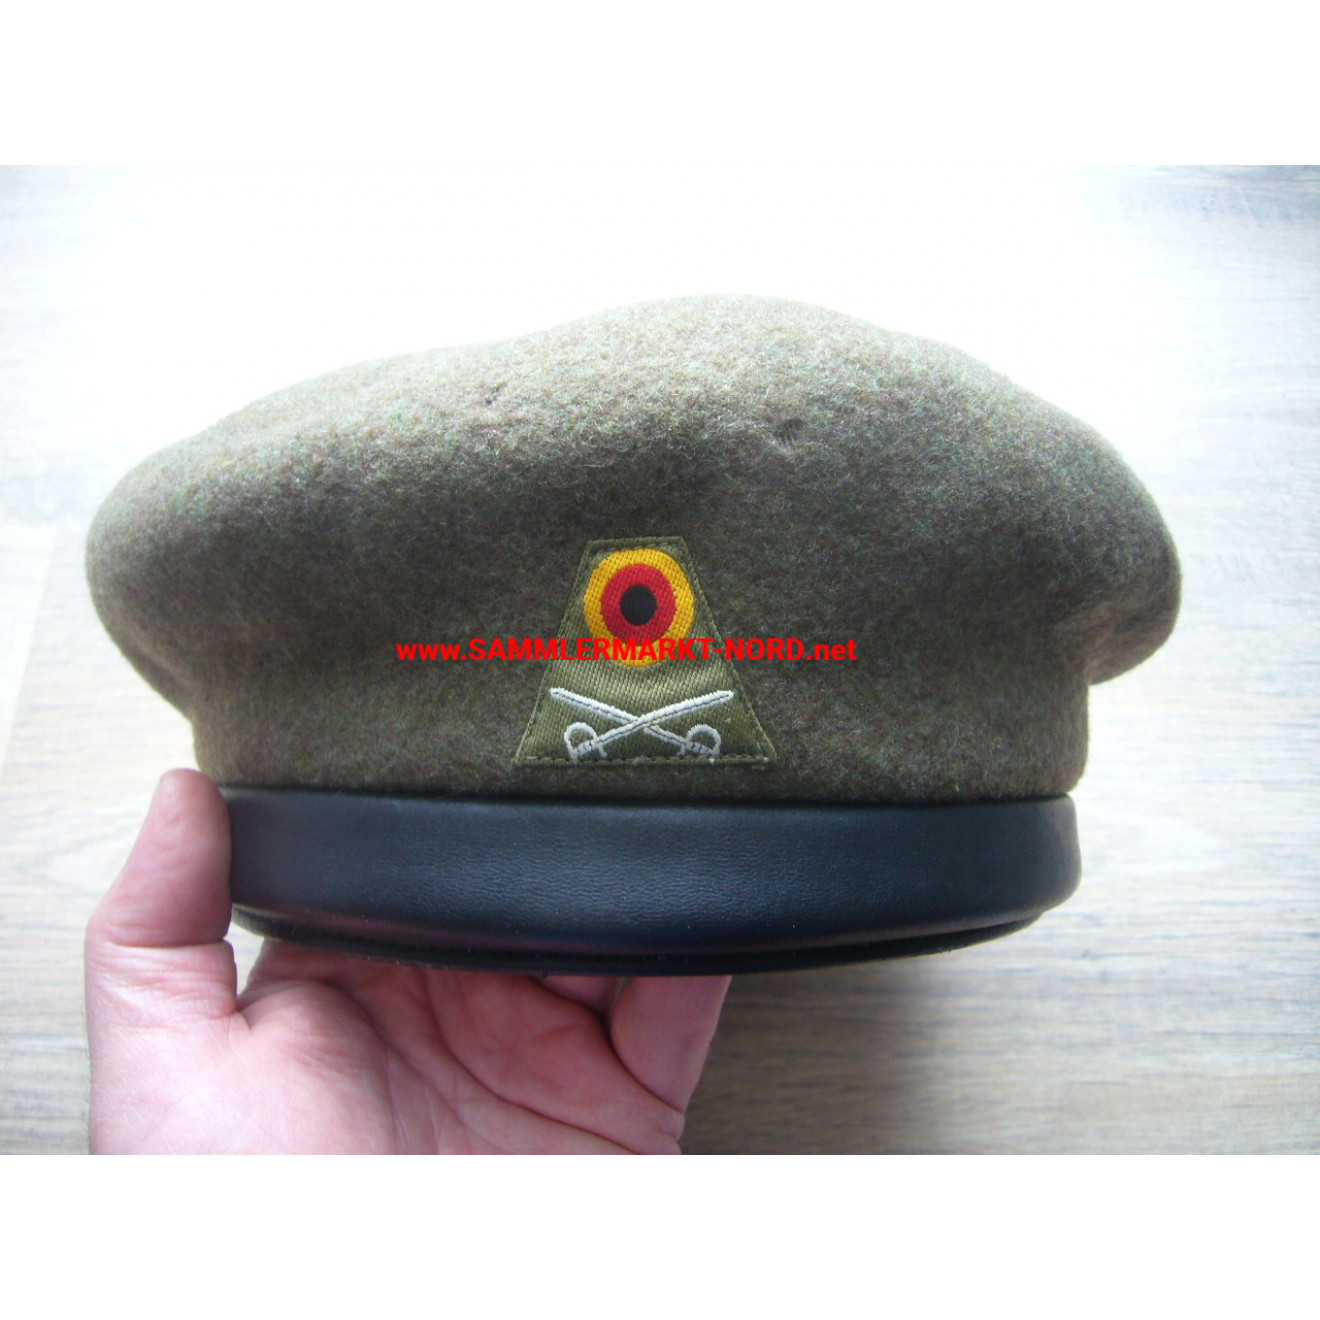 Bundeswehr - cap for tank crews